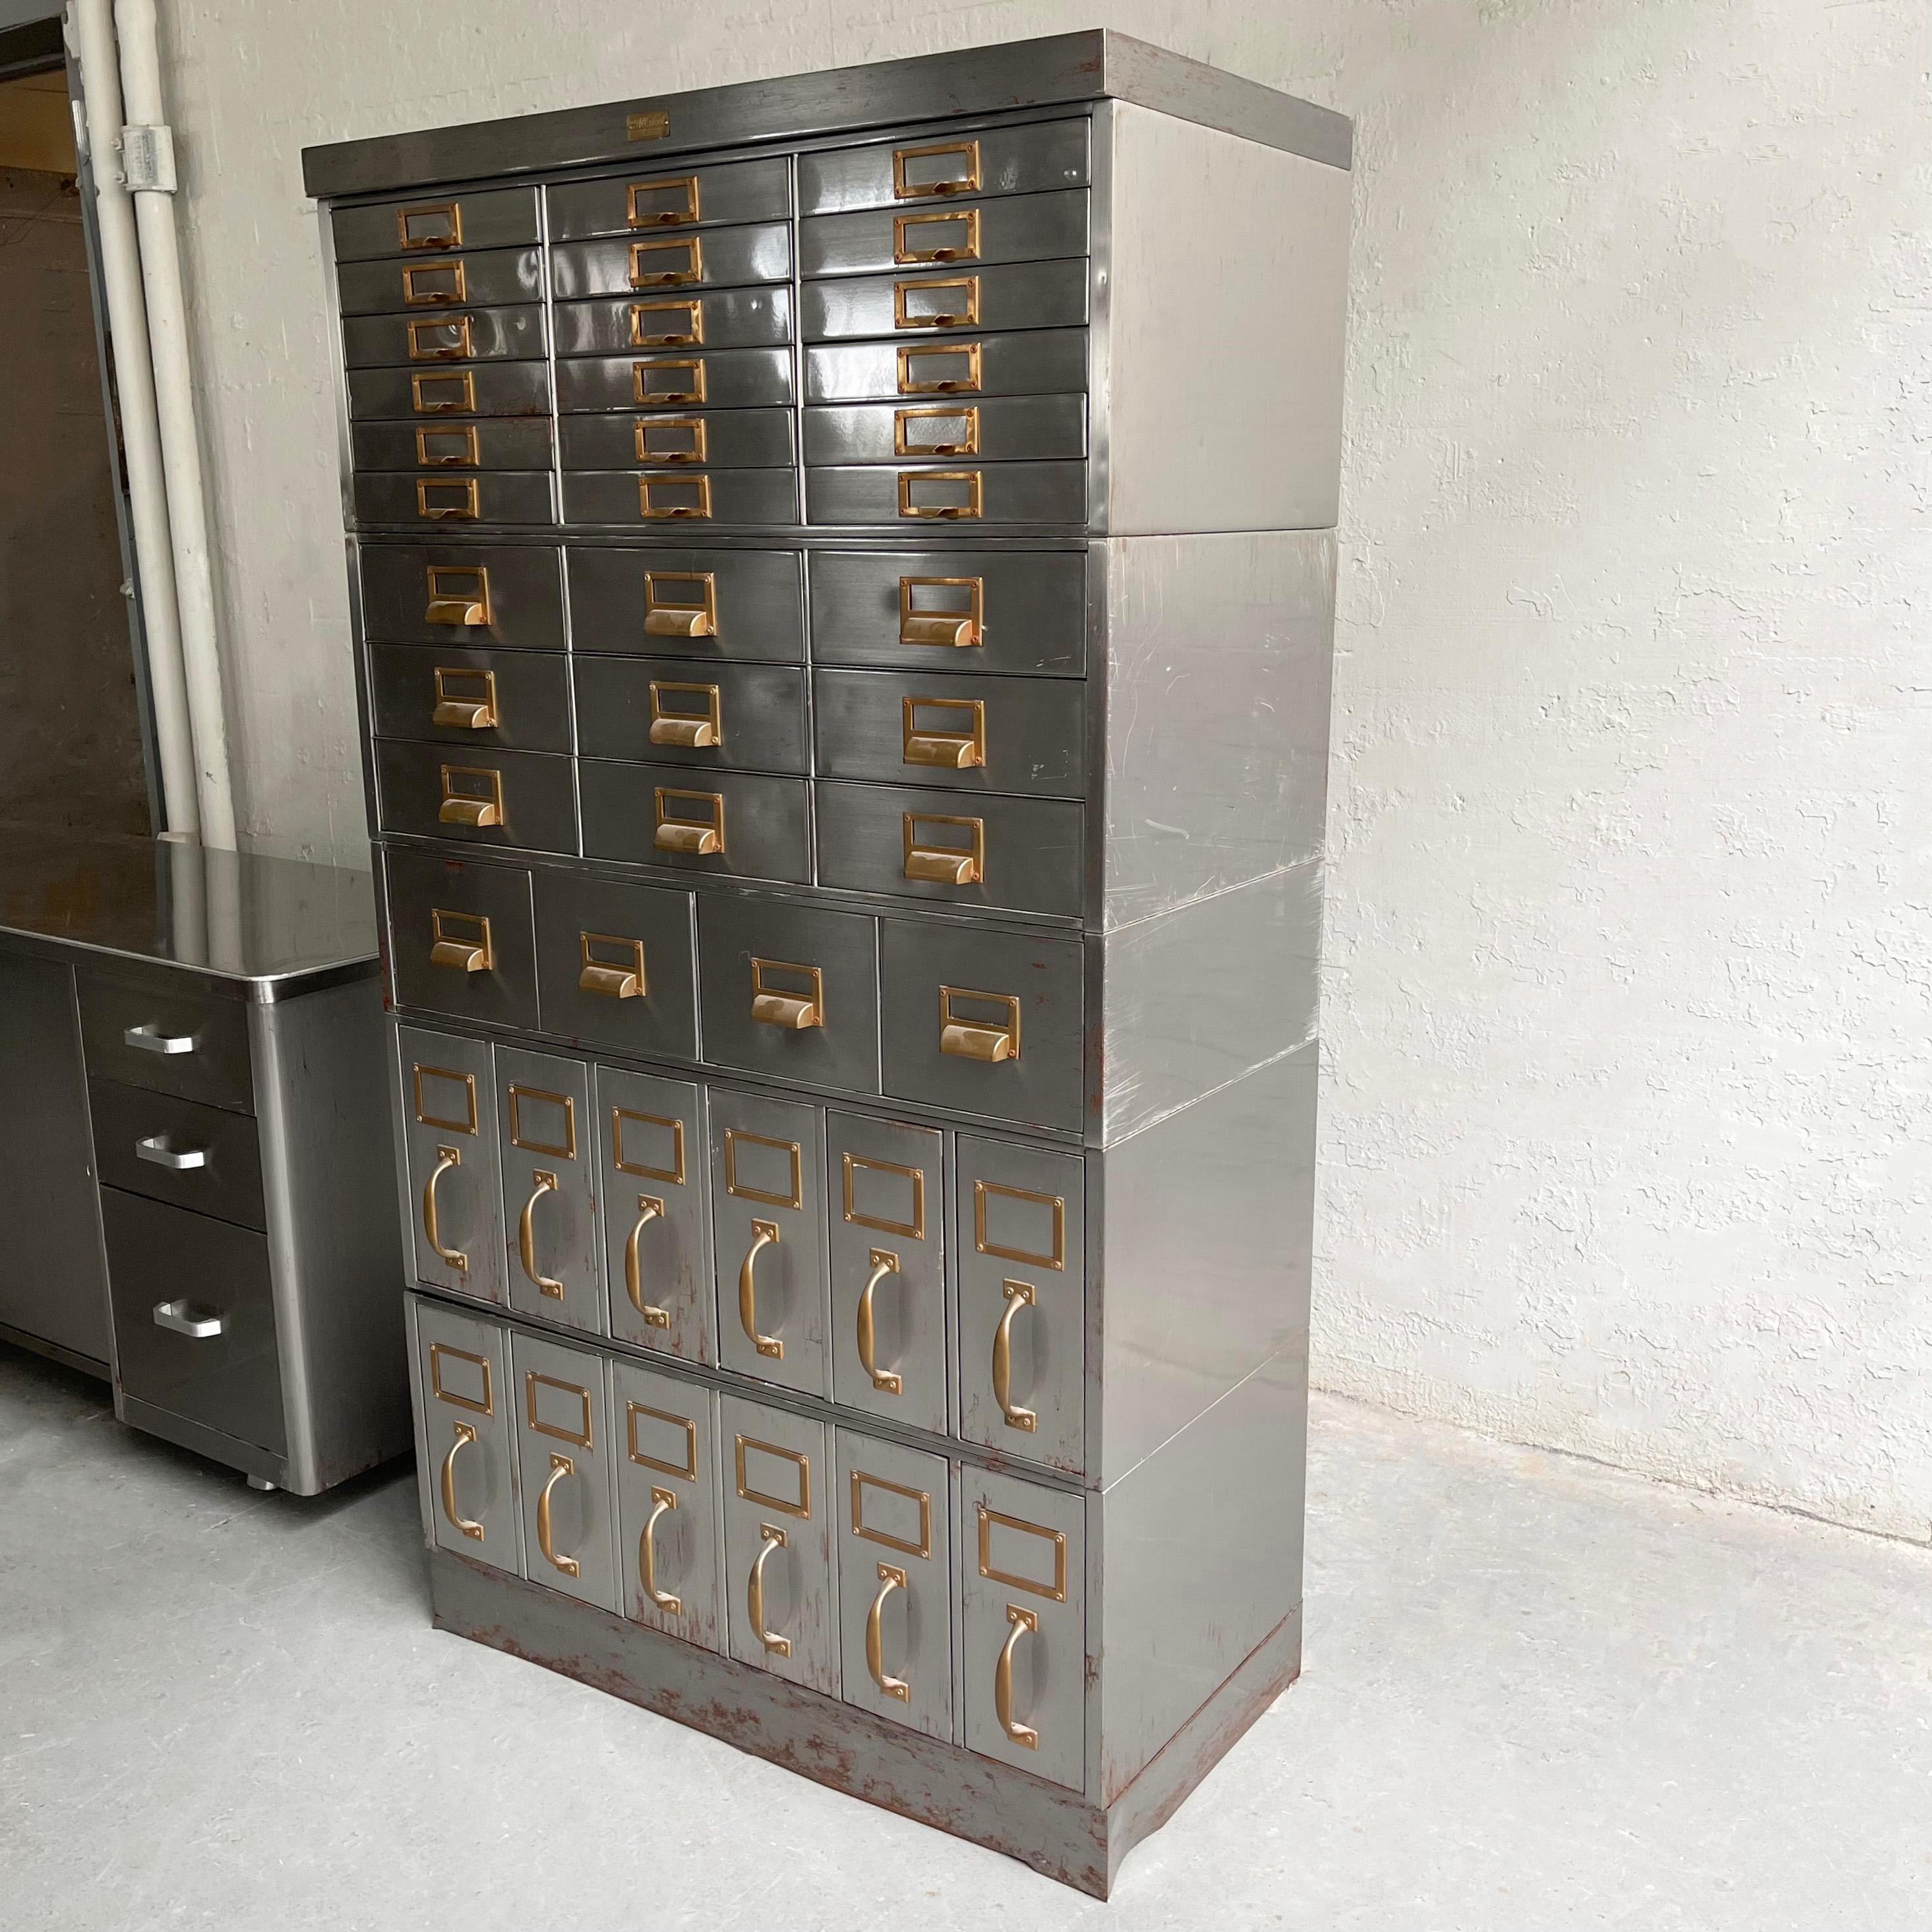 allsteel file cabinets